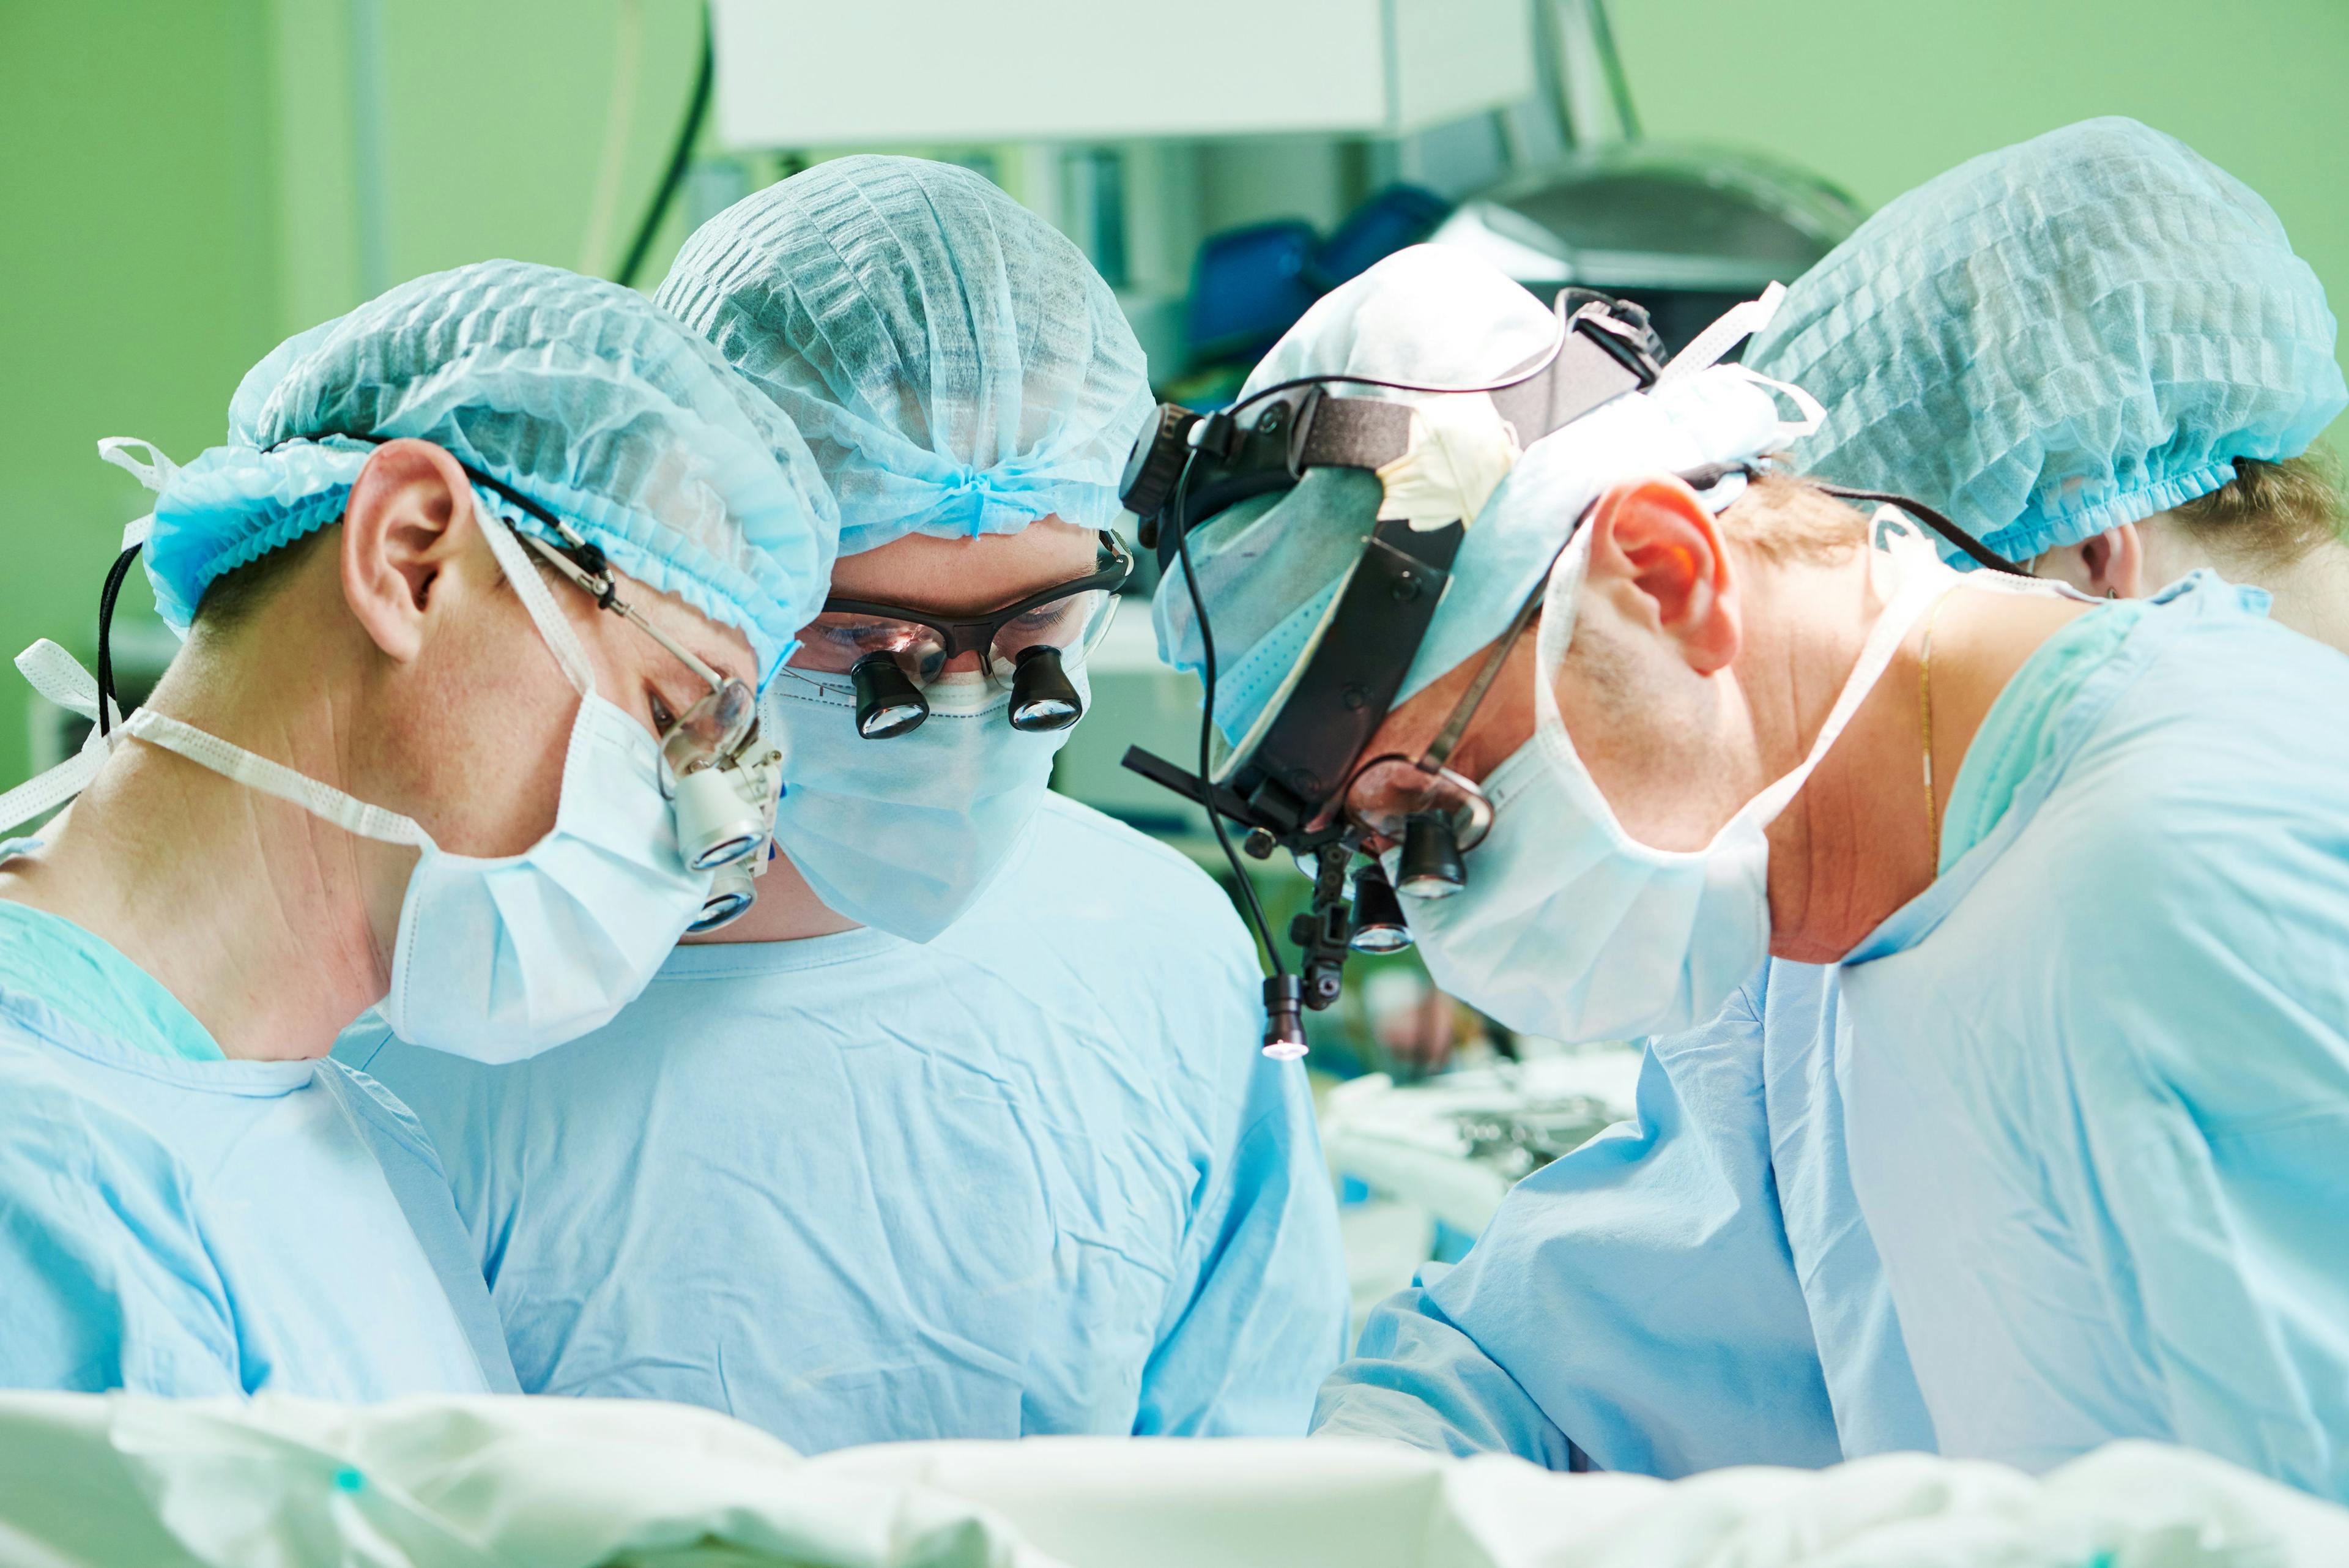 Surgeons performing an amputation.